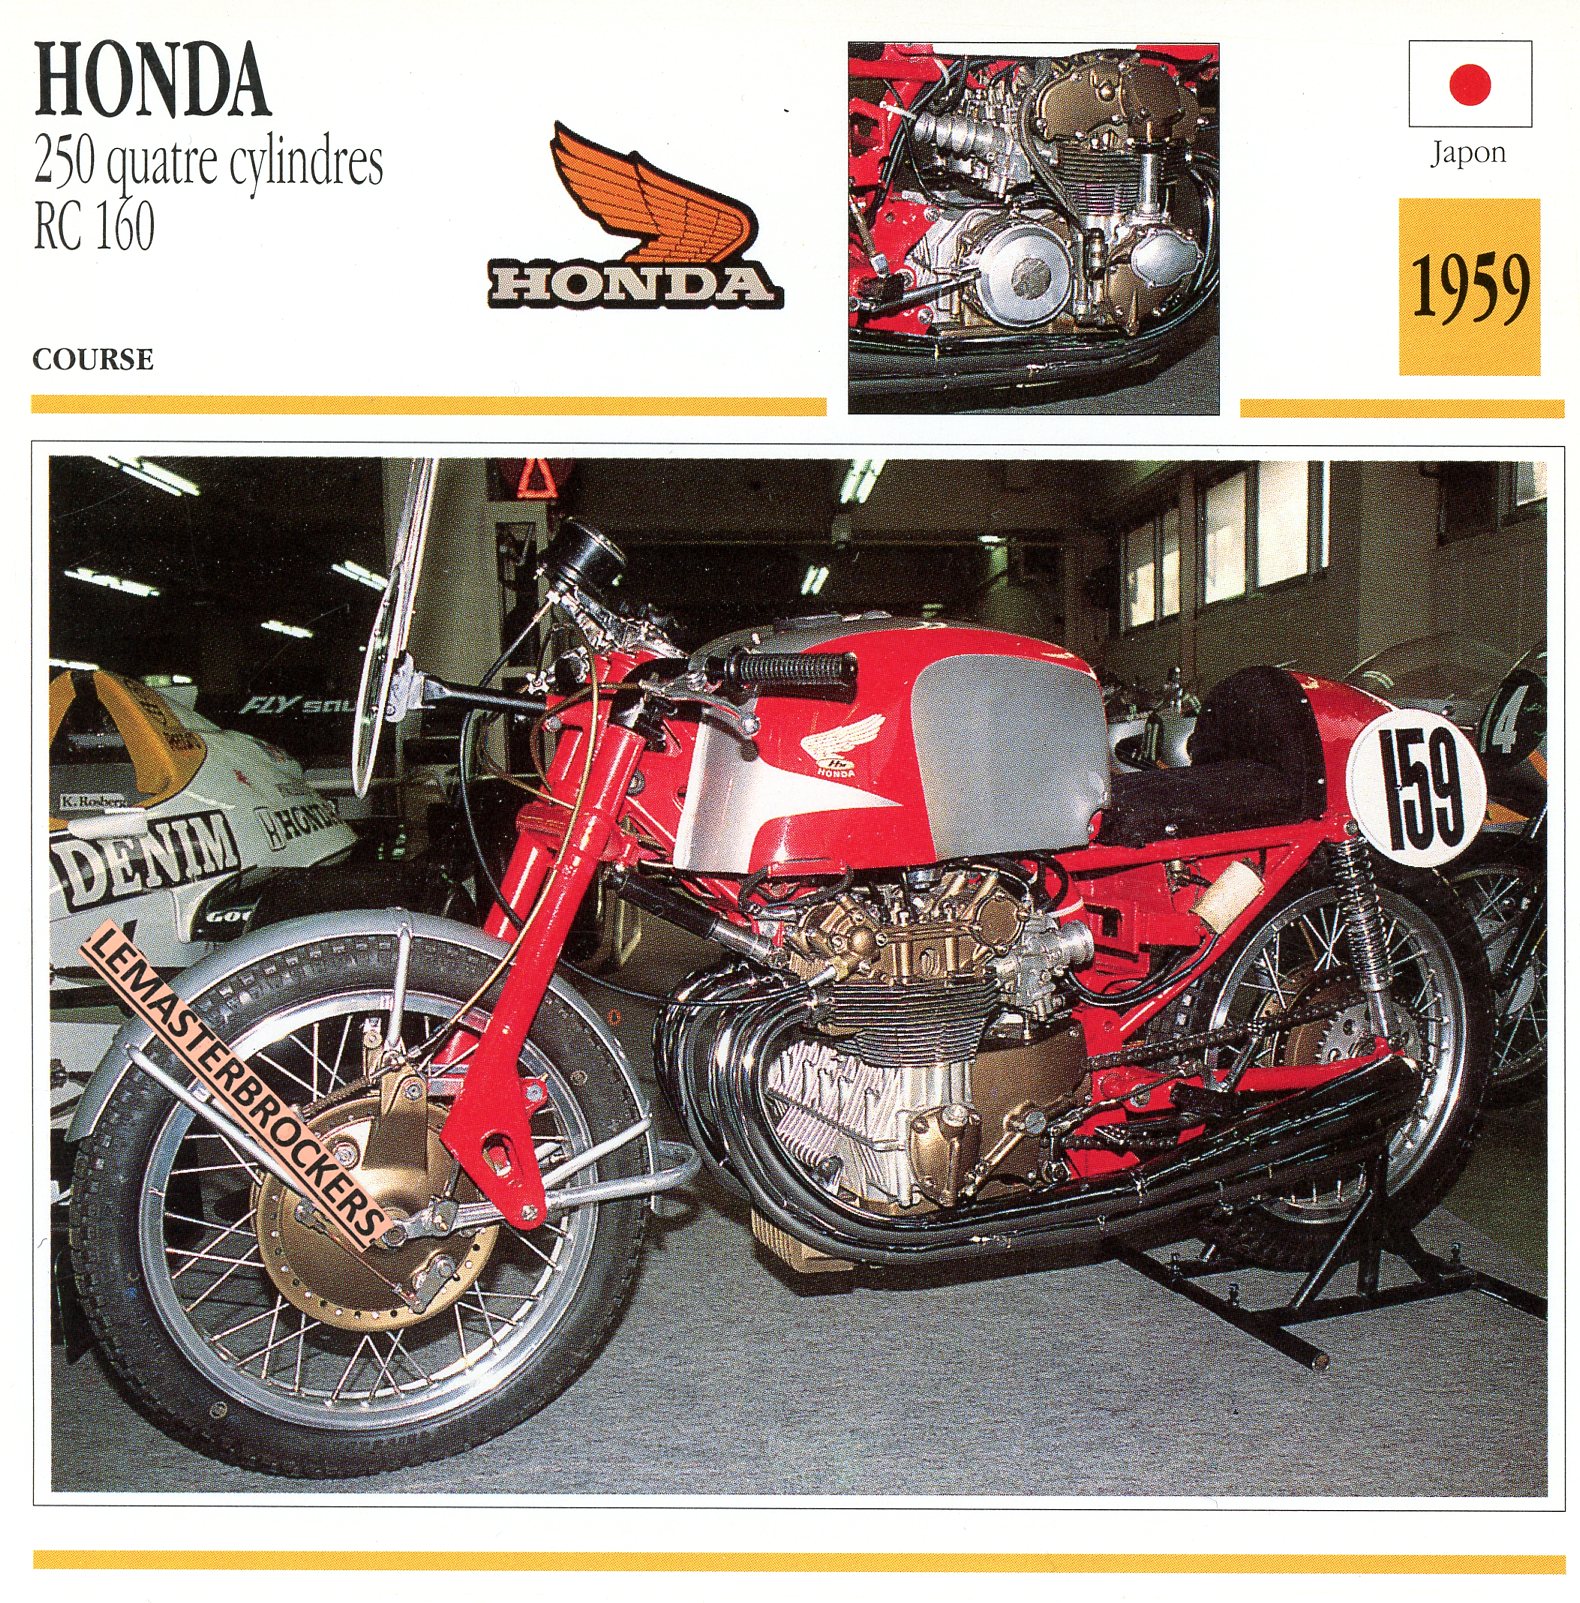 FICHE-MOTO-HONDA-250-RC160-1959-LEMASTERBROCKERS-CARS-MOTORCYCLE